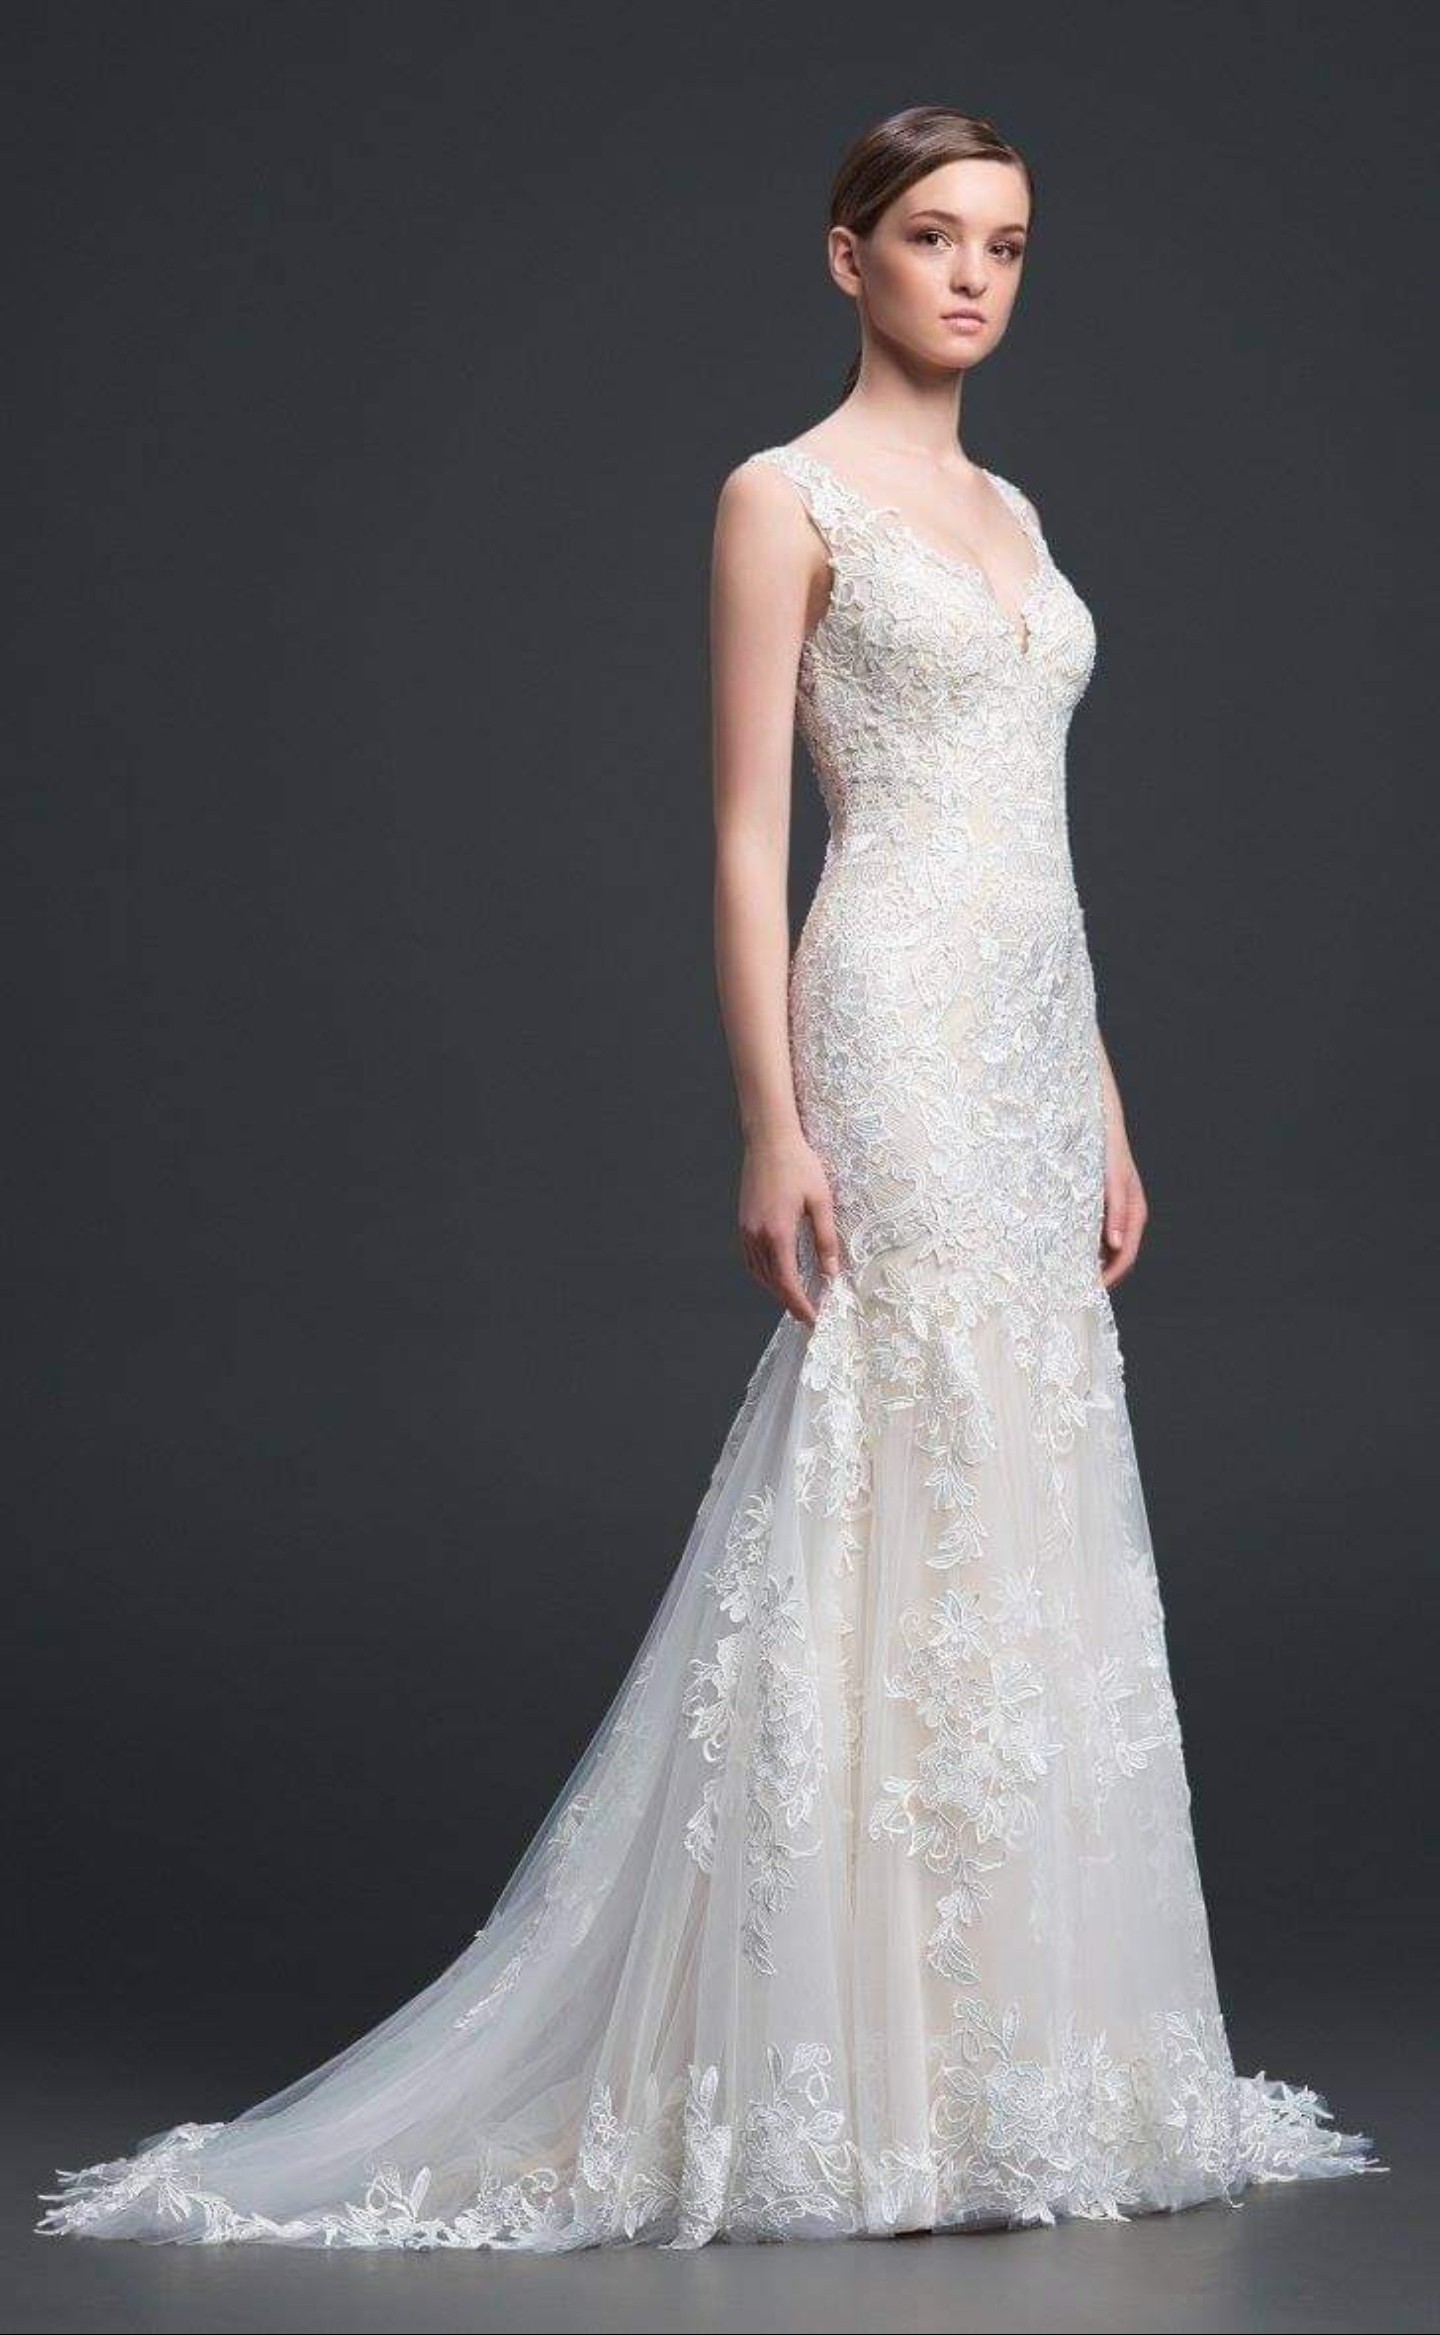 Lenovia Sample Wedding Dress Save 92% - Stillwhite